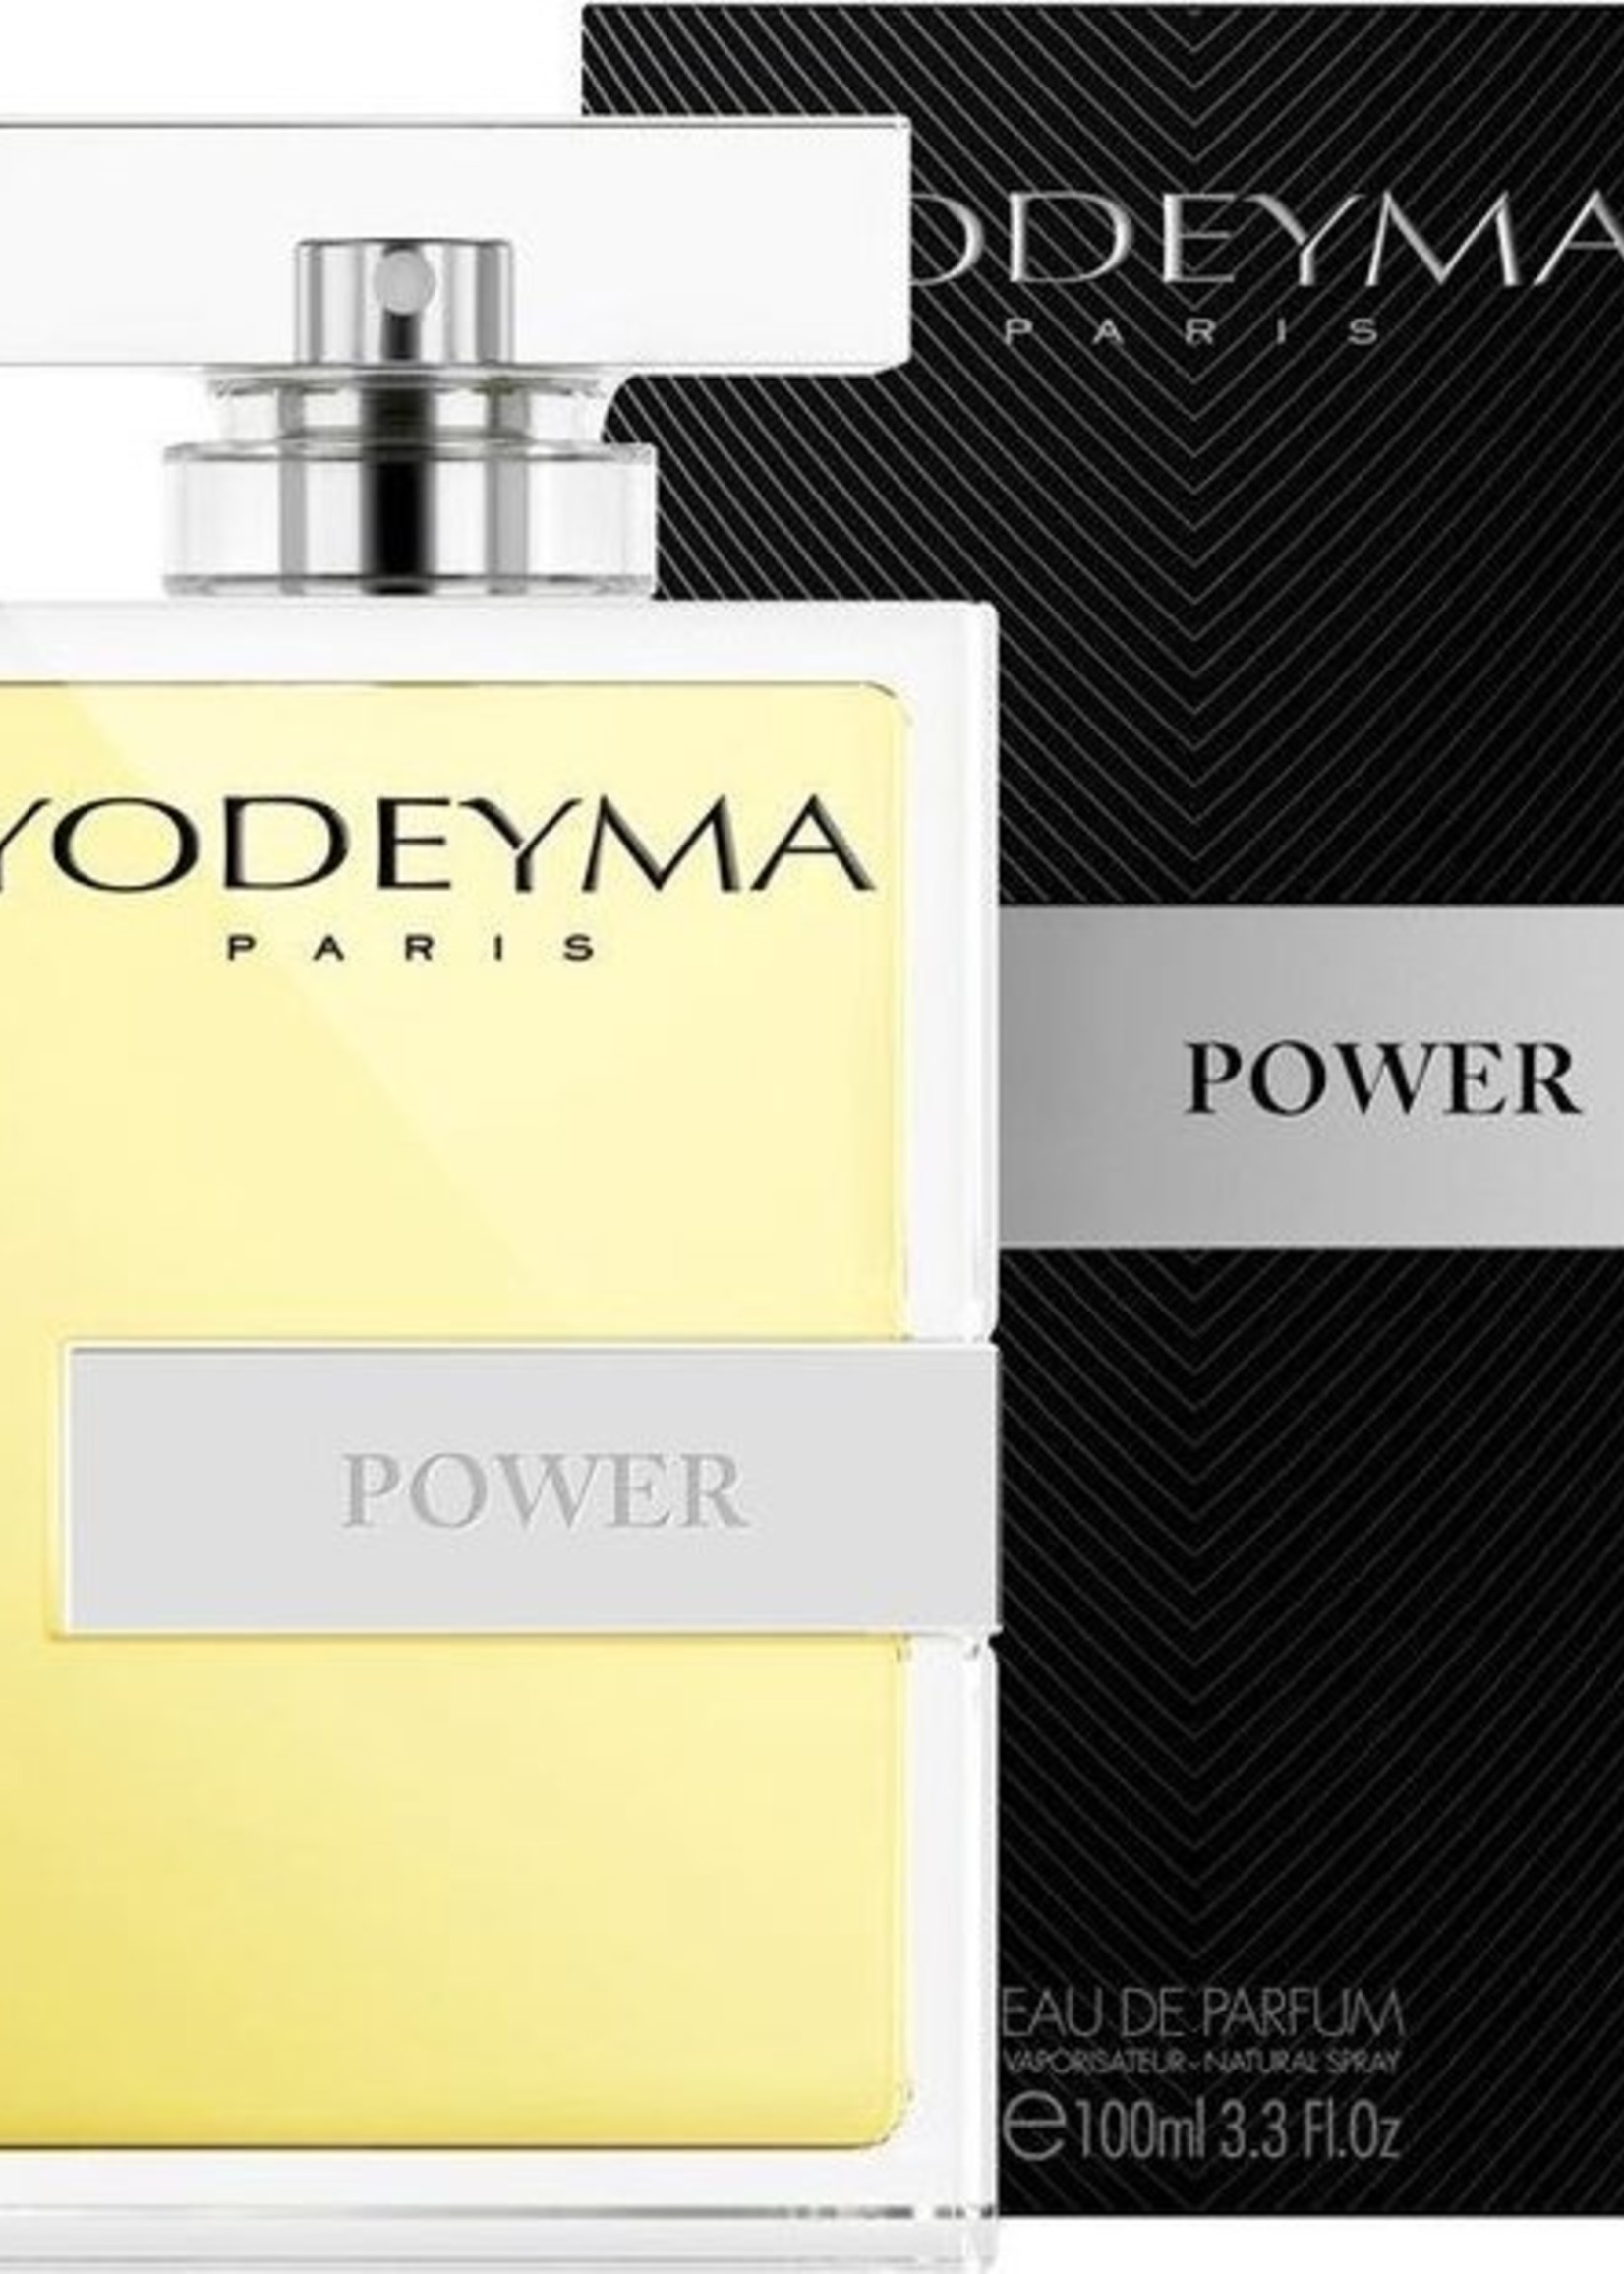 Yodeyma Parfums POWER Eau de Parfum 100 ml.